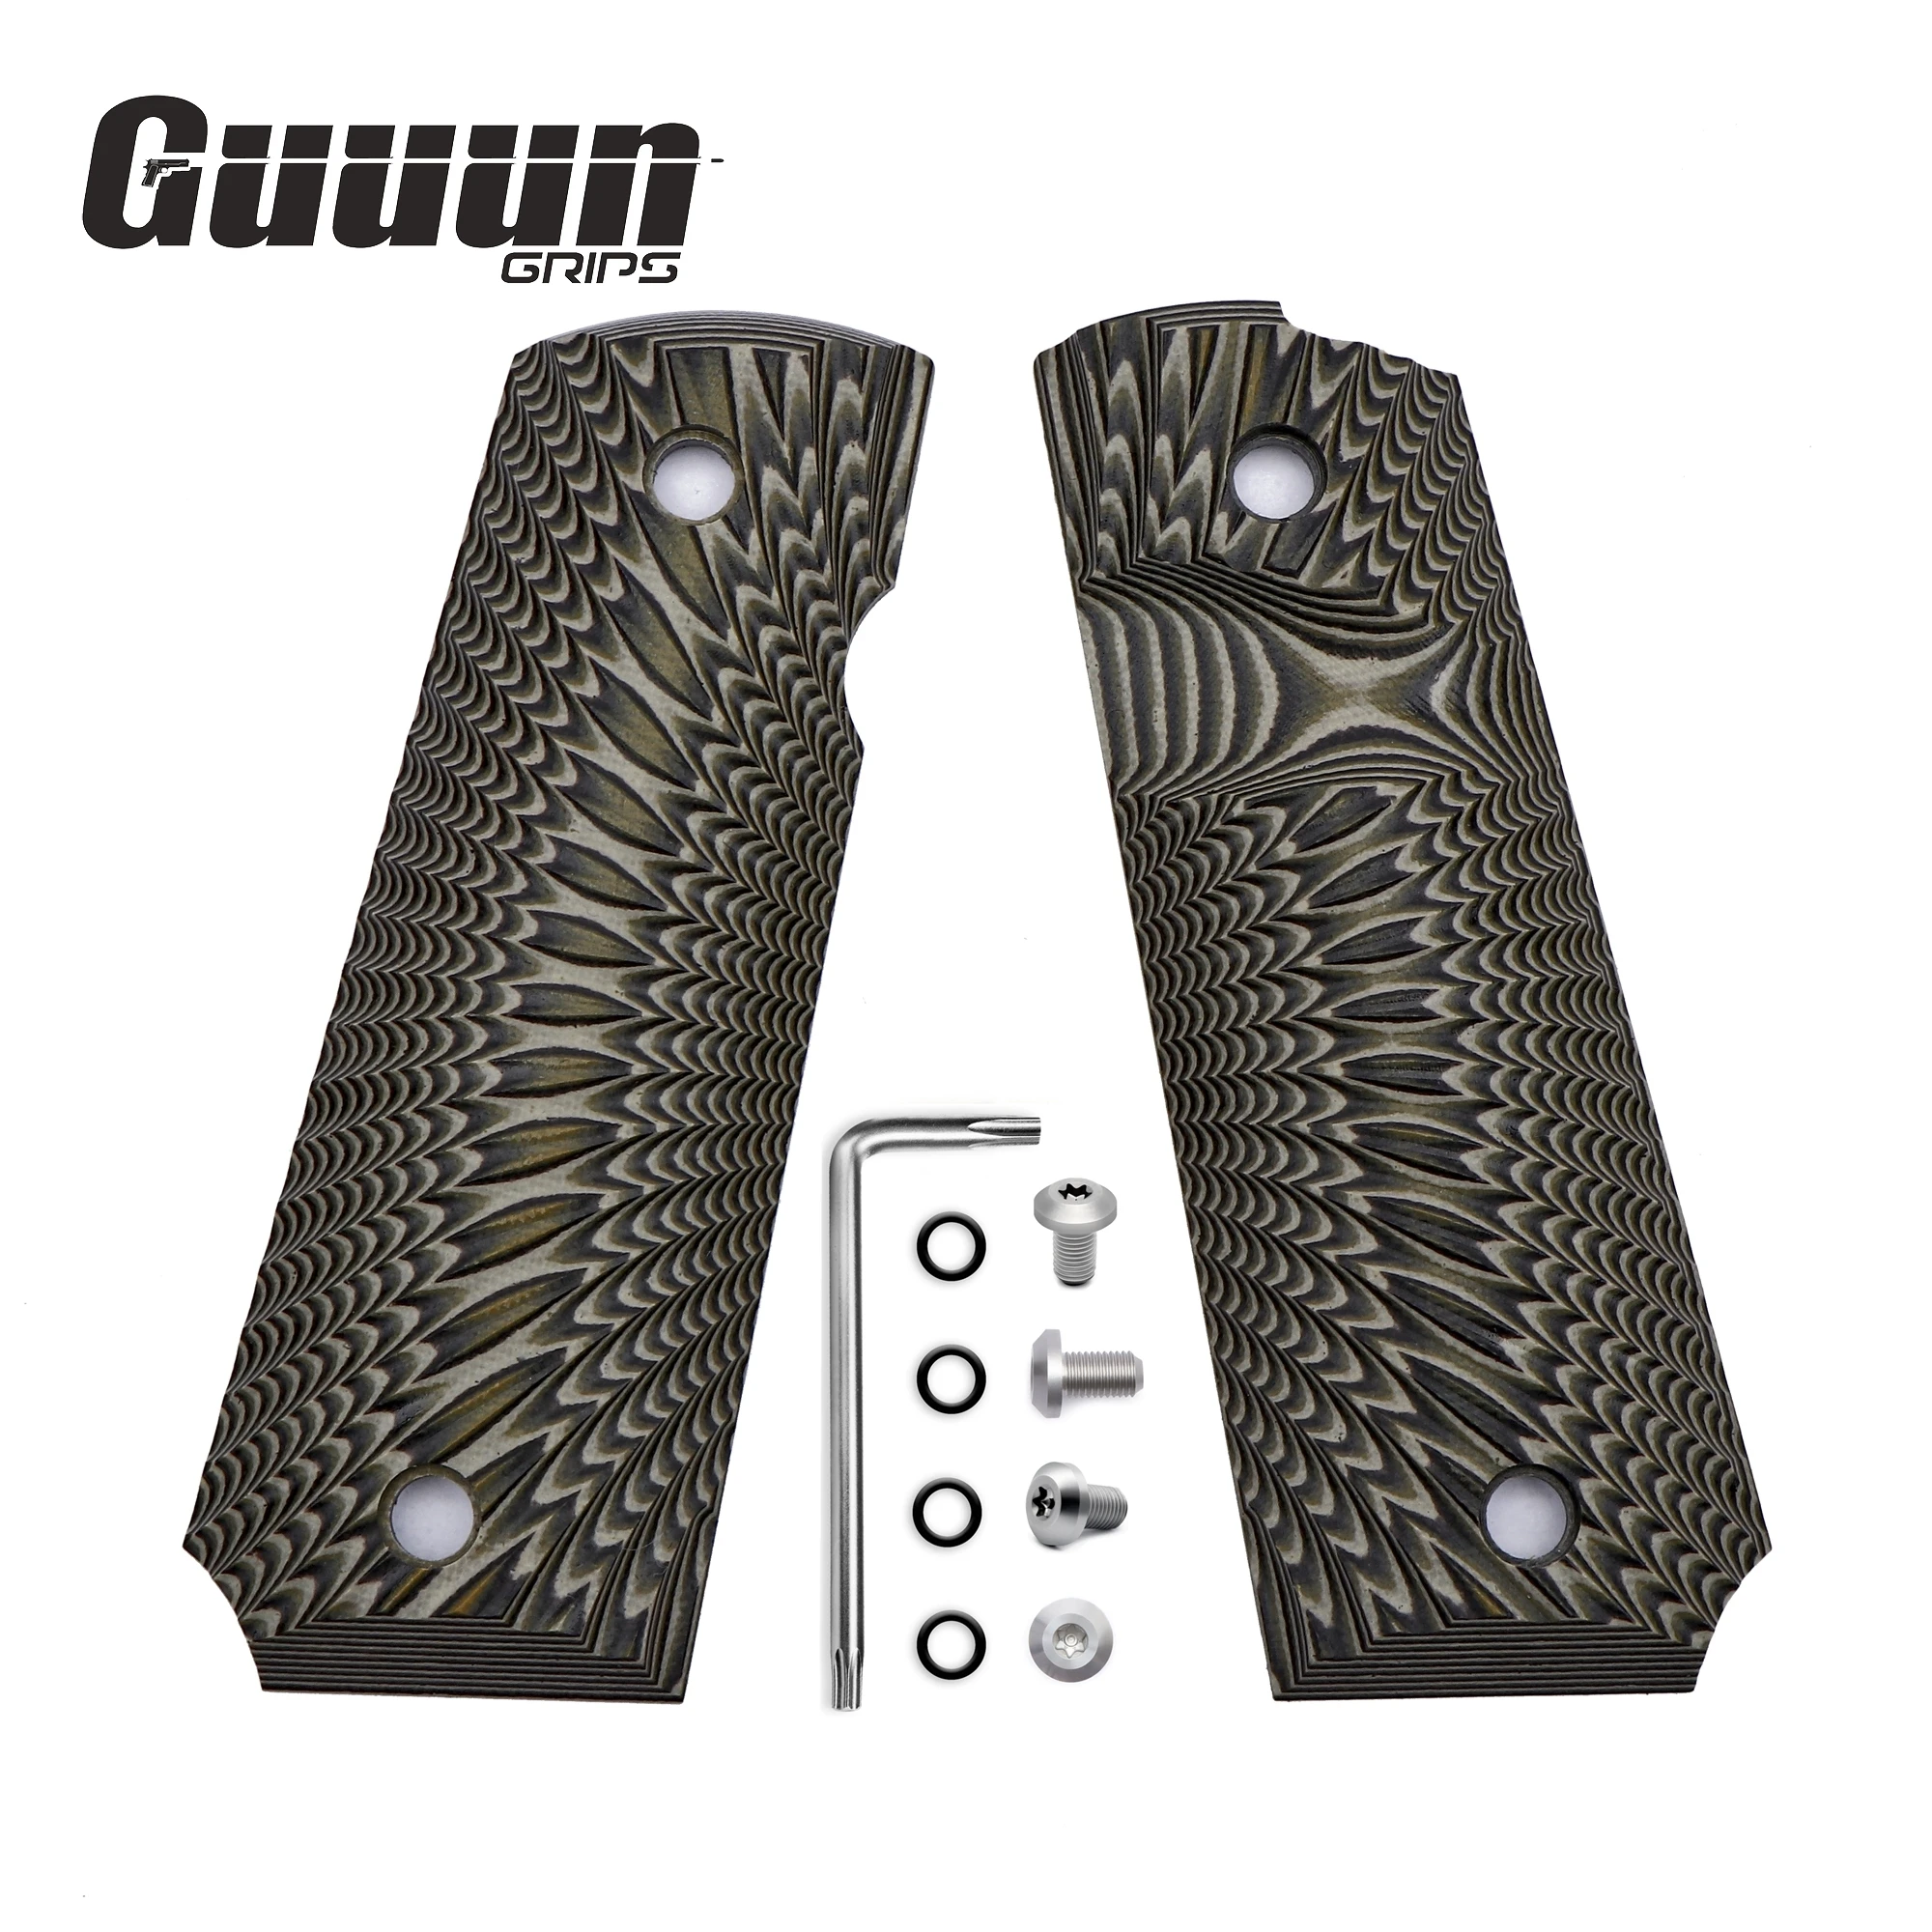 Guuun 1911 Grips G10 Full Size Non-Slip Handle Ambi Safety Cut Big Scoop Sunburst Texture